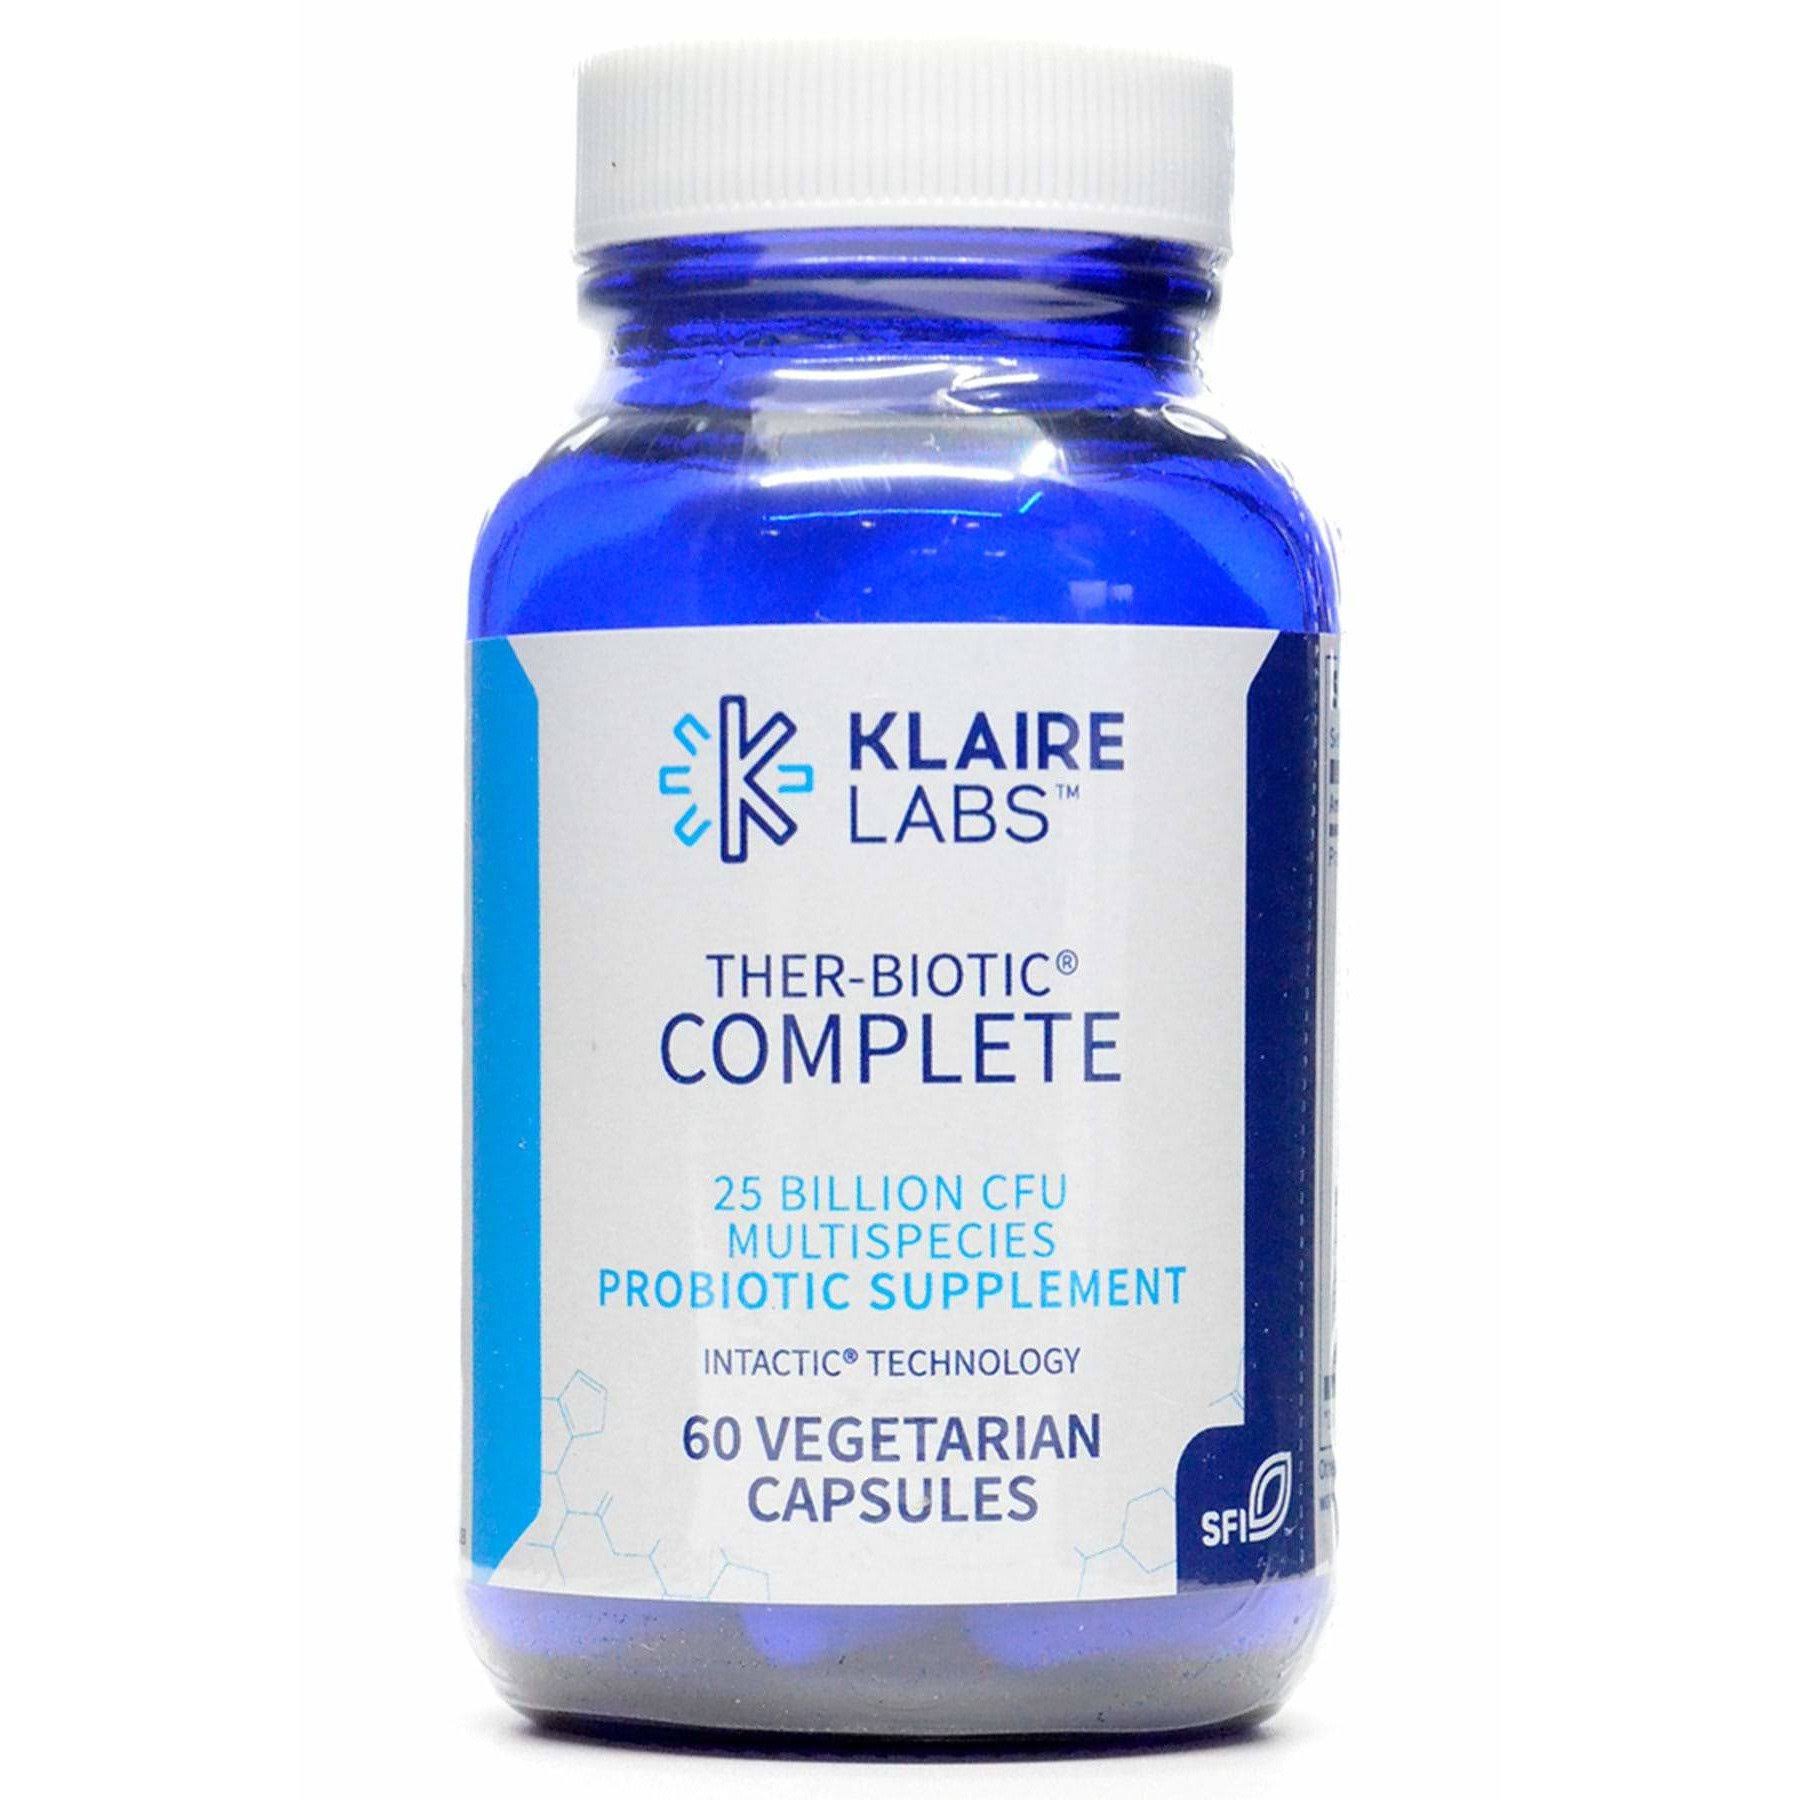 Klaire Labs Therbiotic Complete Probiotic Supplement - 60 capsules